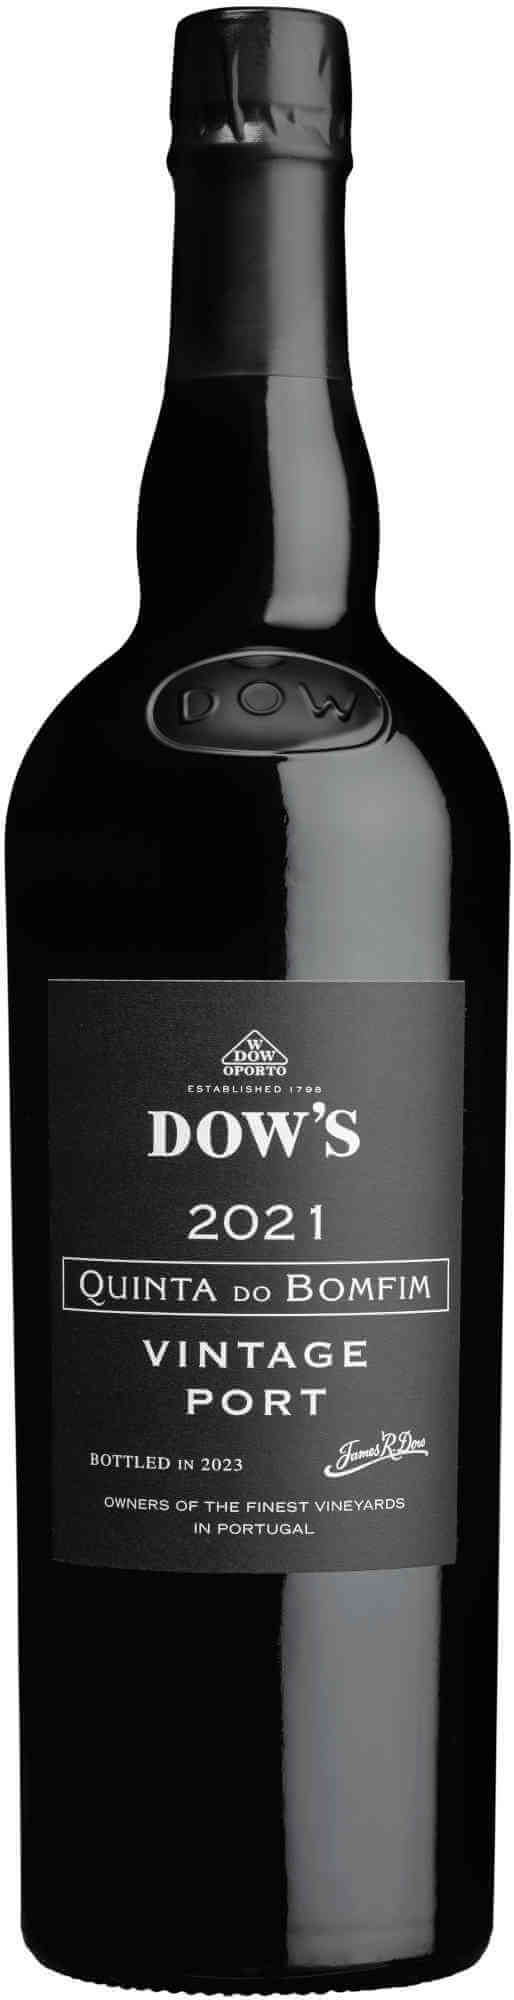 Dows-Vintage-Port-Bomfim-2021